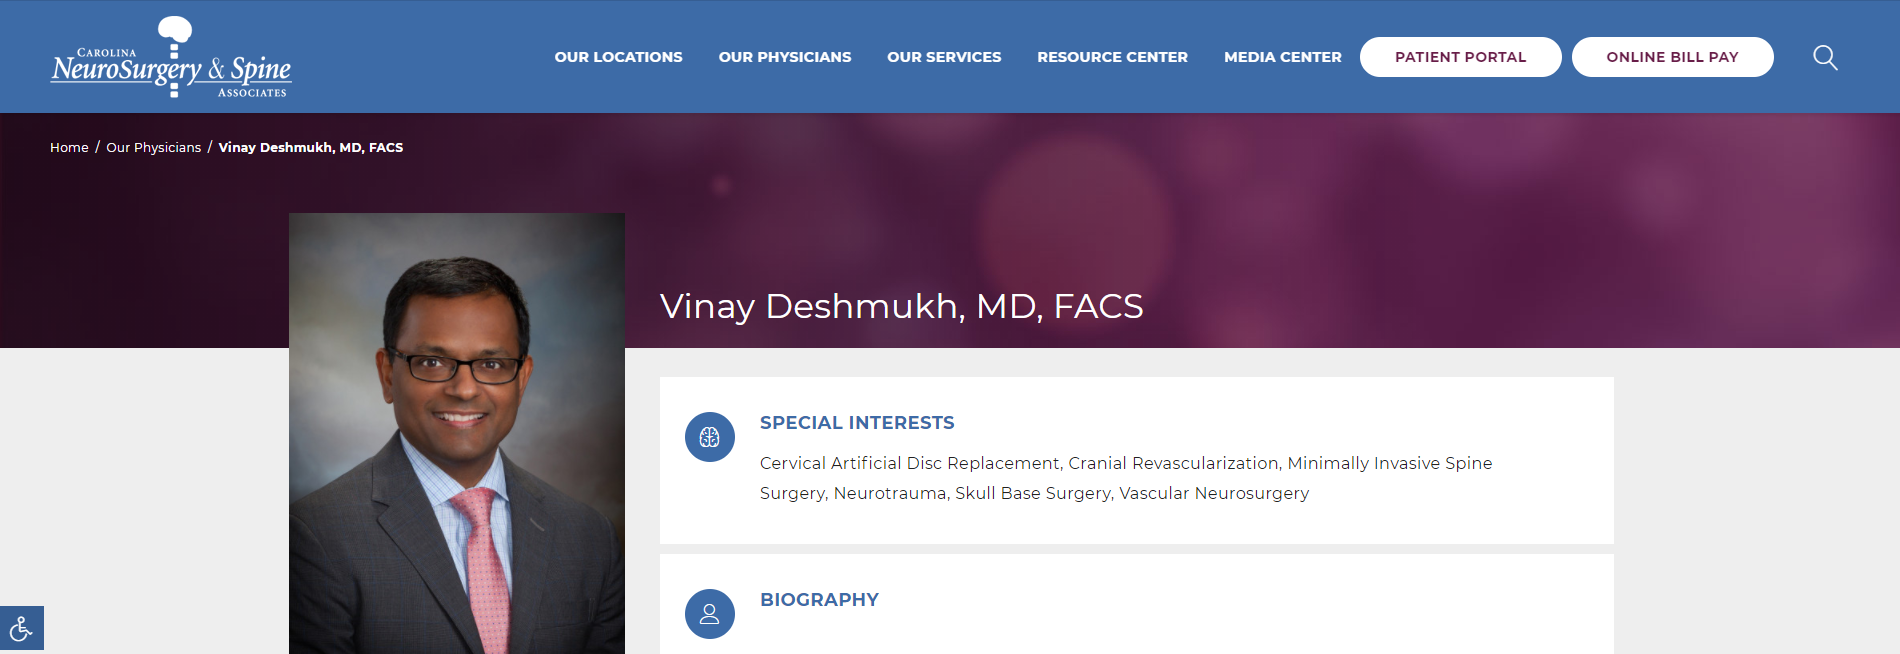 Vinay Deshmukh, MD, FACS